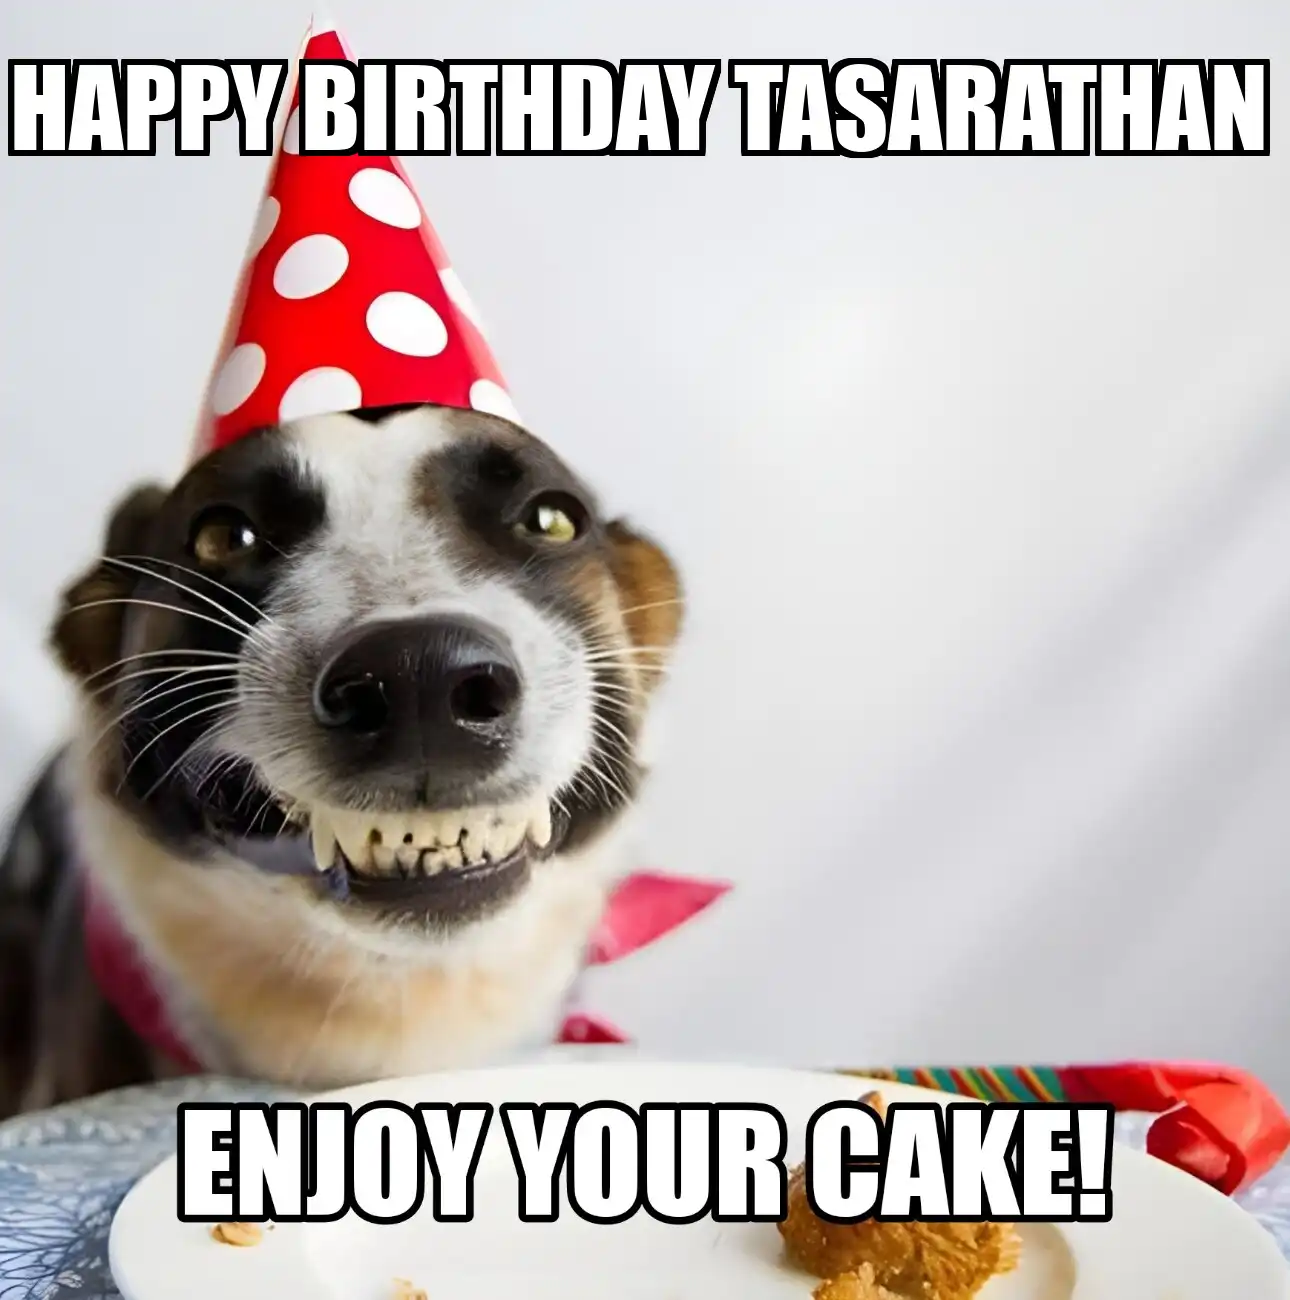 Happy Birthday Tasarathan Enjoy Your Cake Dog Meme